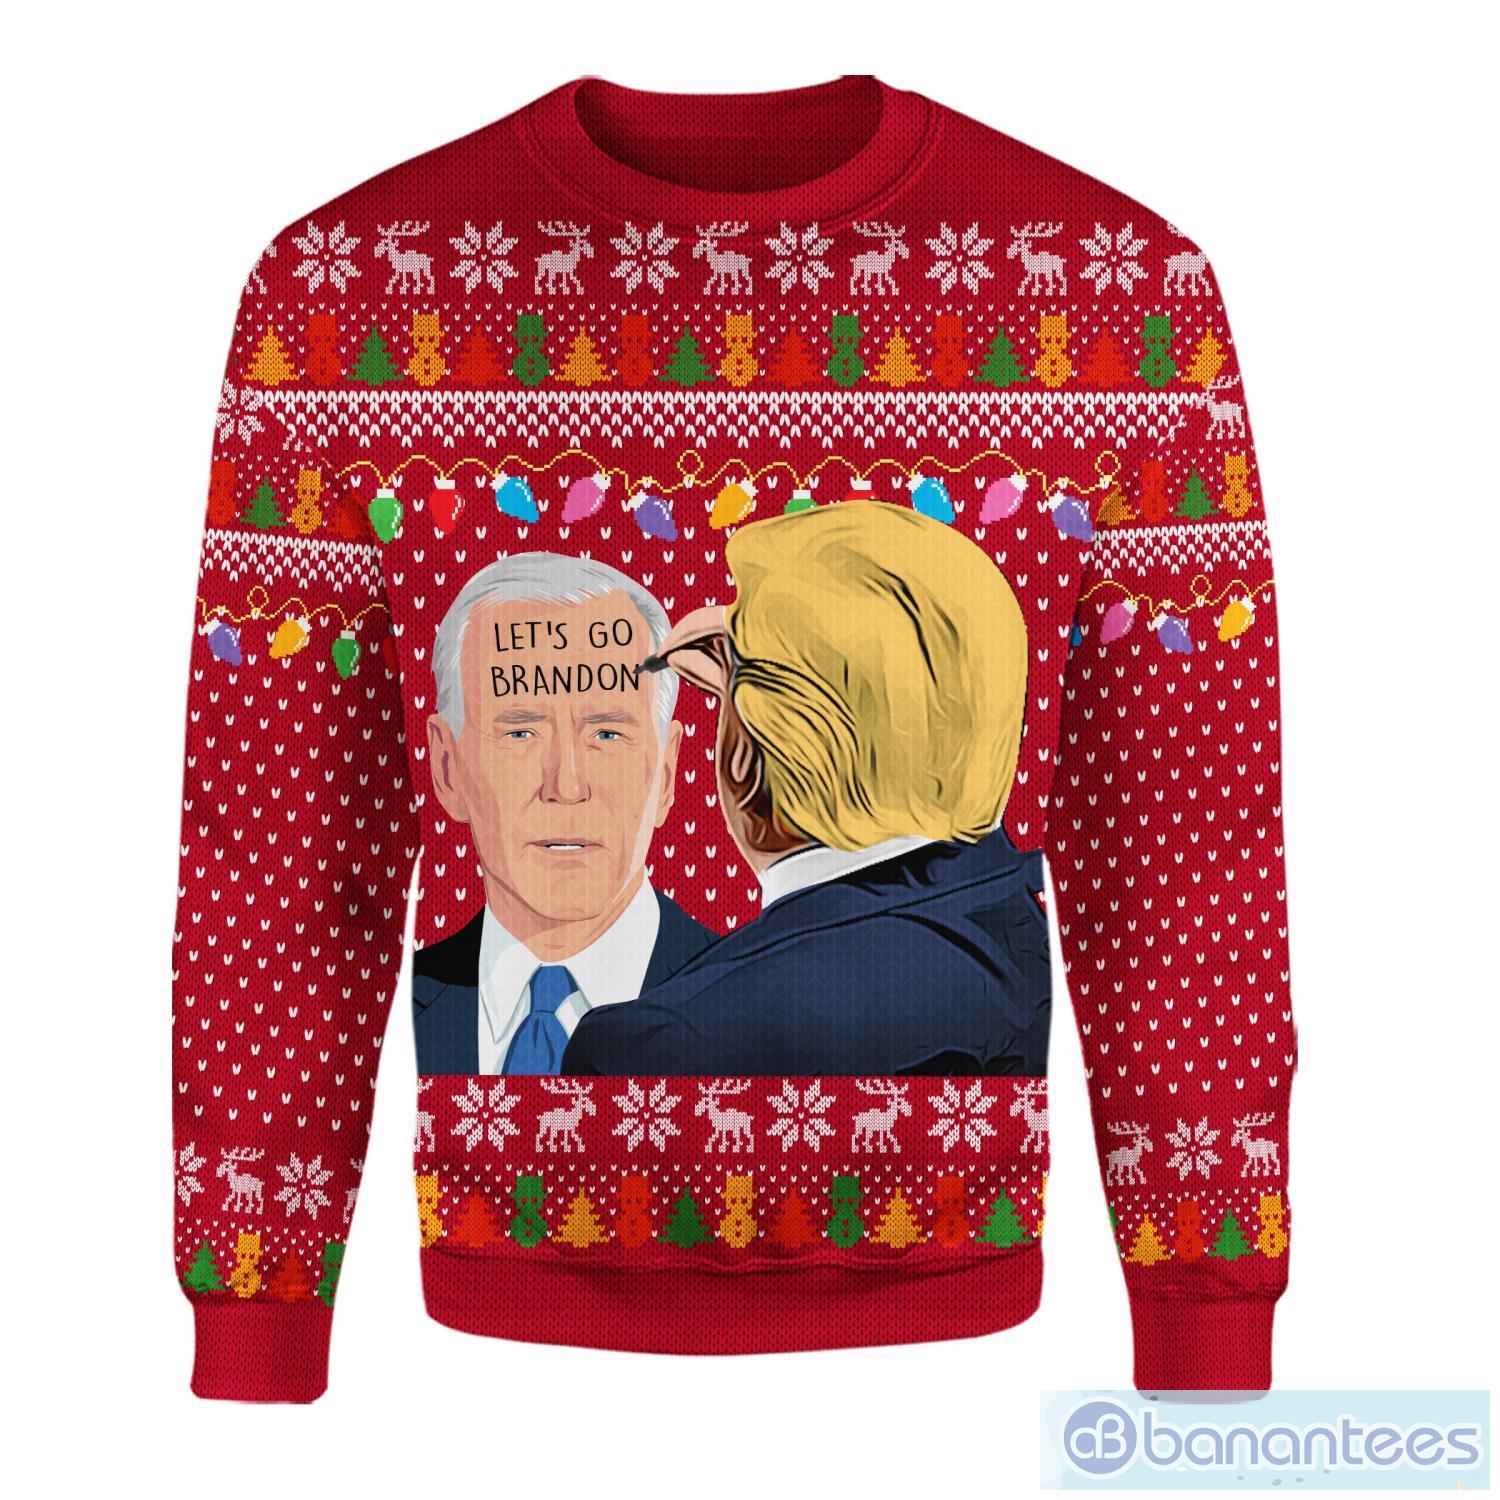 Let’s Go Brandon Trump Supporter Joe Biden Ugly Christmas Sweater Product Photo 2